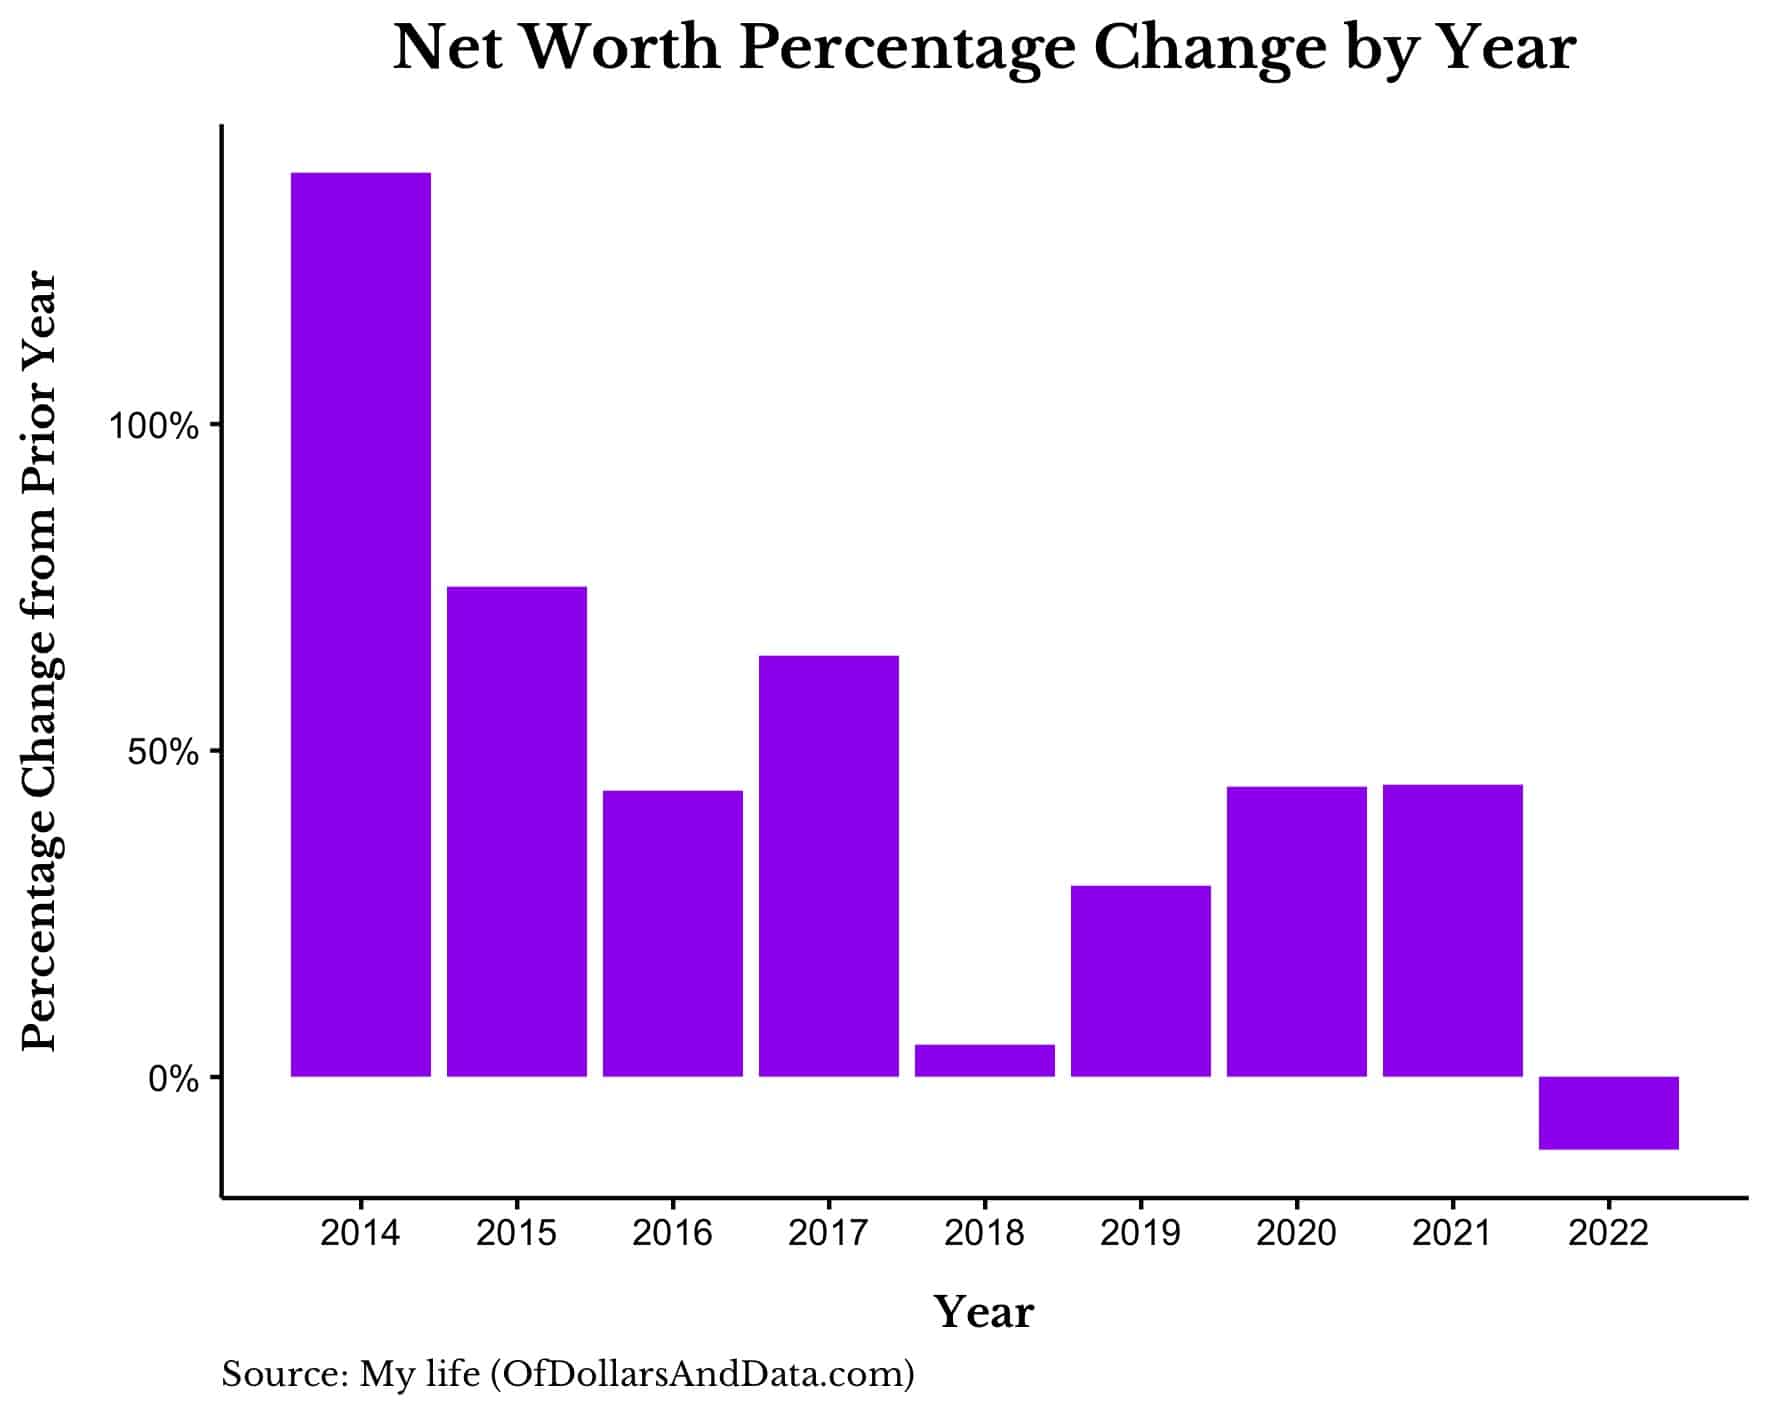 Nick Maggiulli net worth percentage change by year